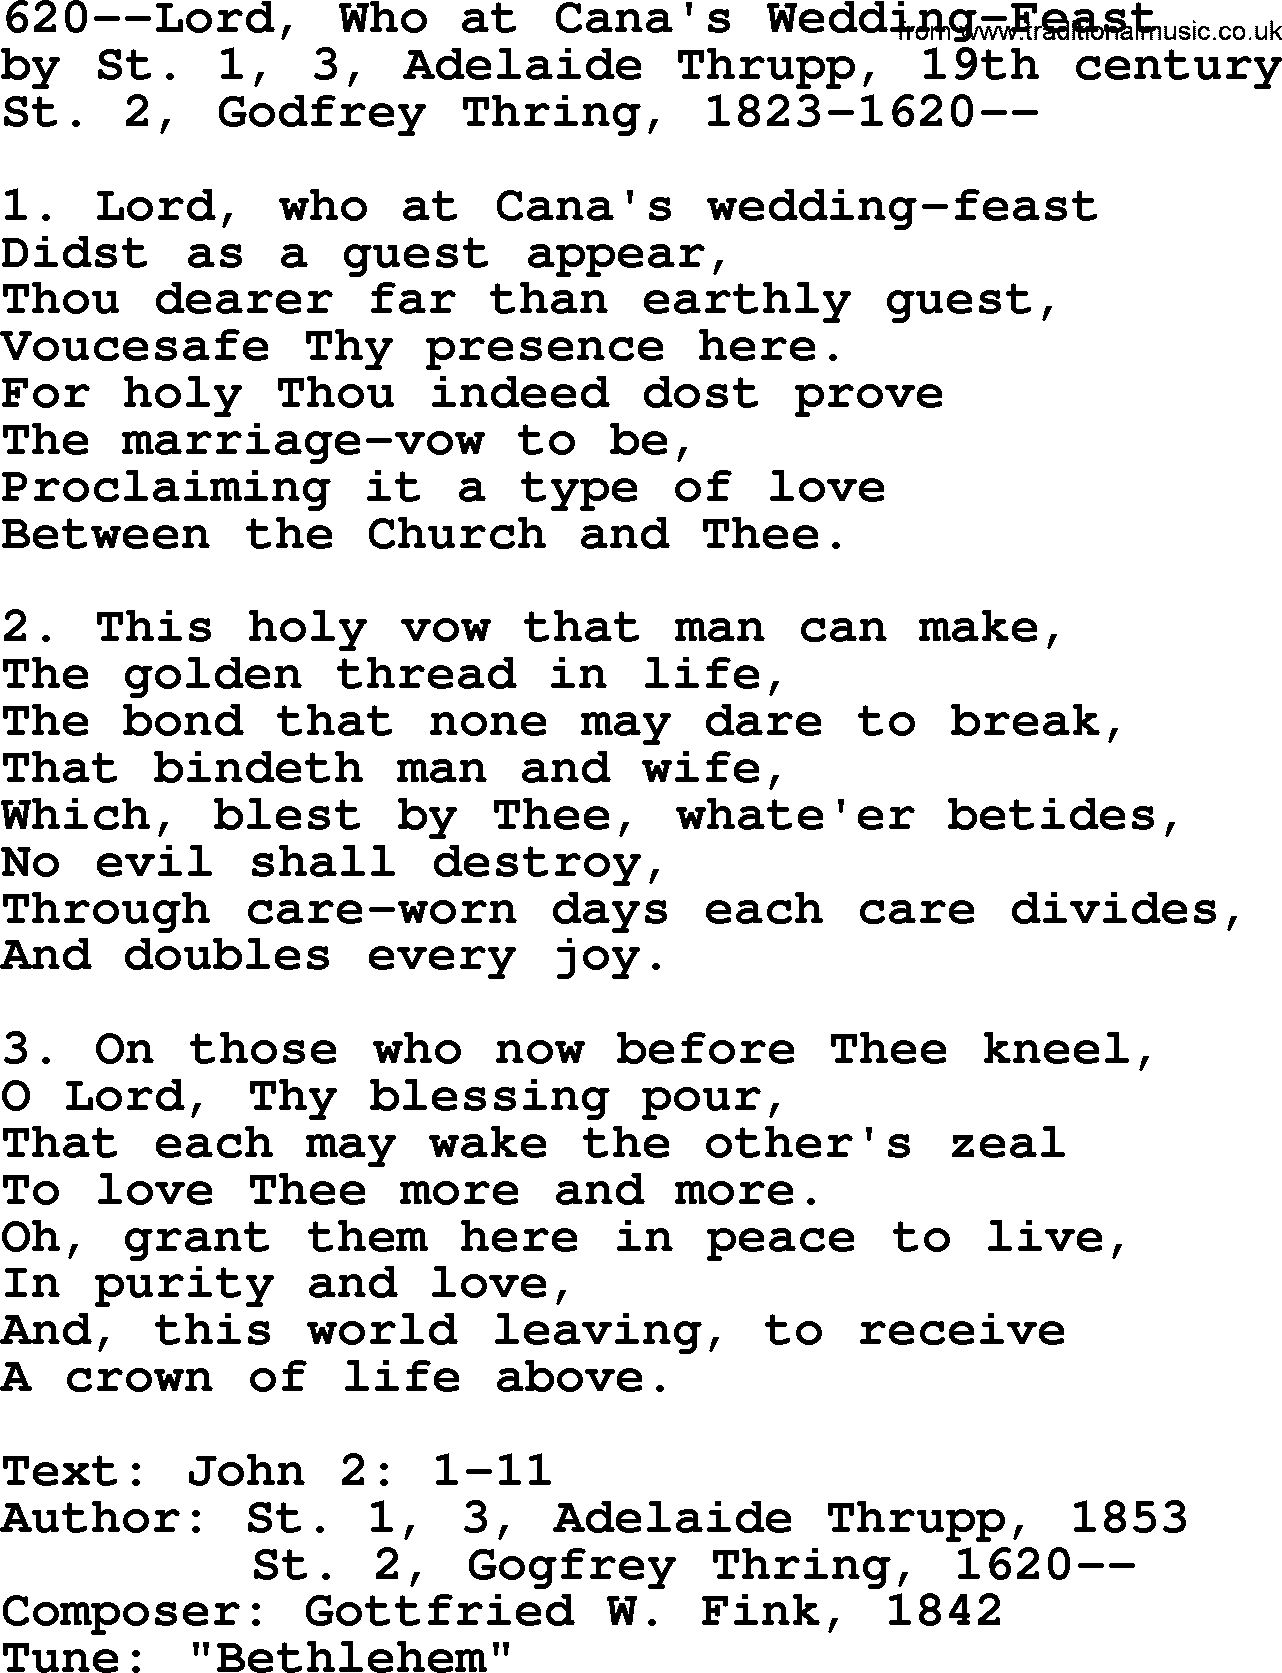 Lutheran Hymn: 620--Lord, Who at Cana's Wedding-Feast.txt lyrics with PDF